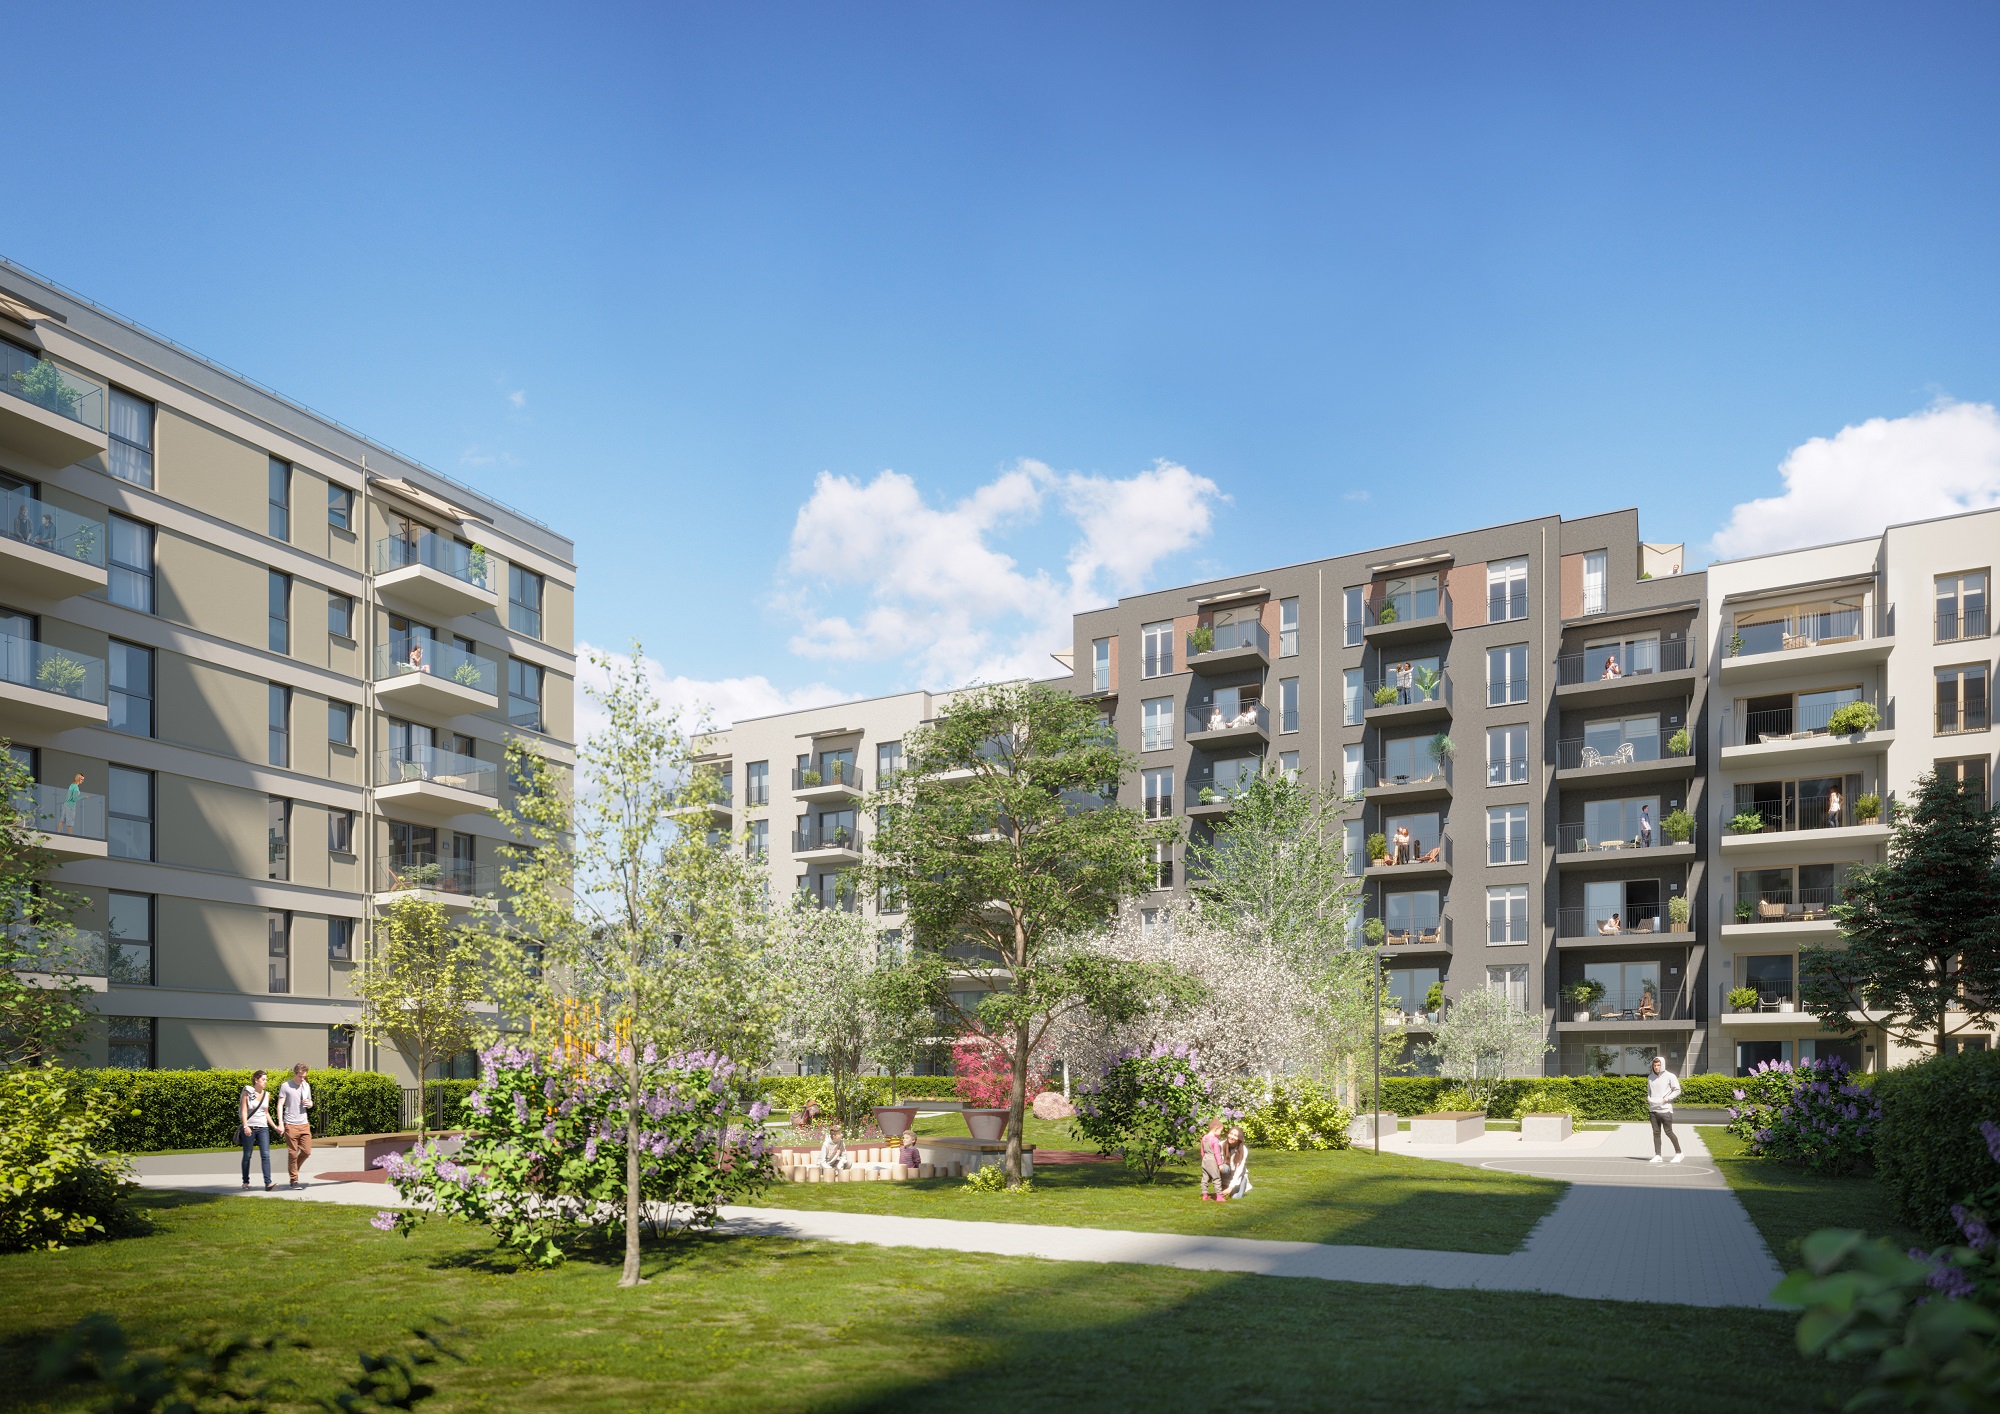 "Schönhof neighbourhood" in Frankfurt: Instone begins construction of 132 flats in "Florentinus" 